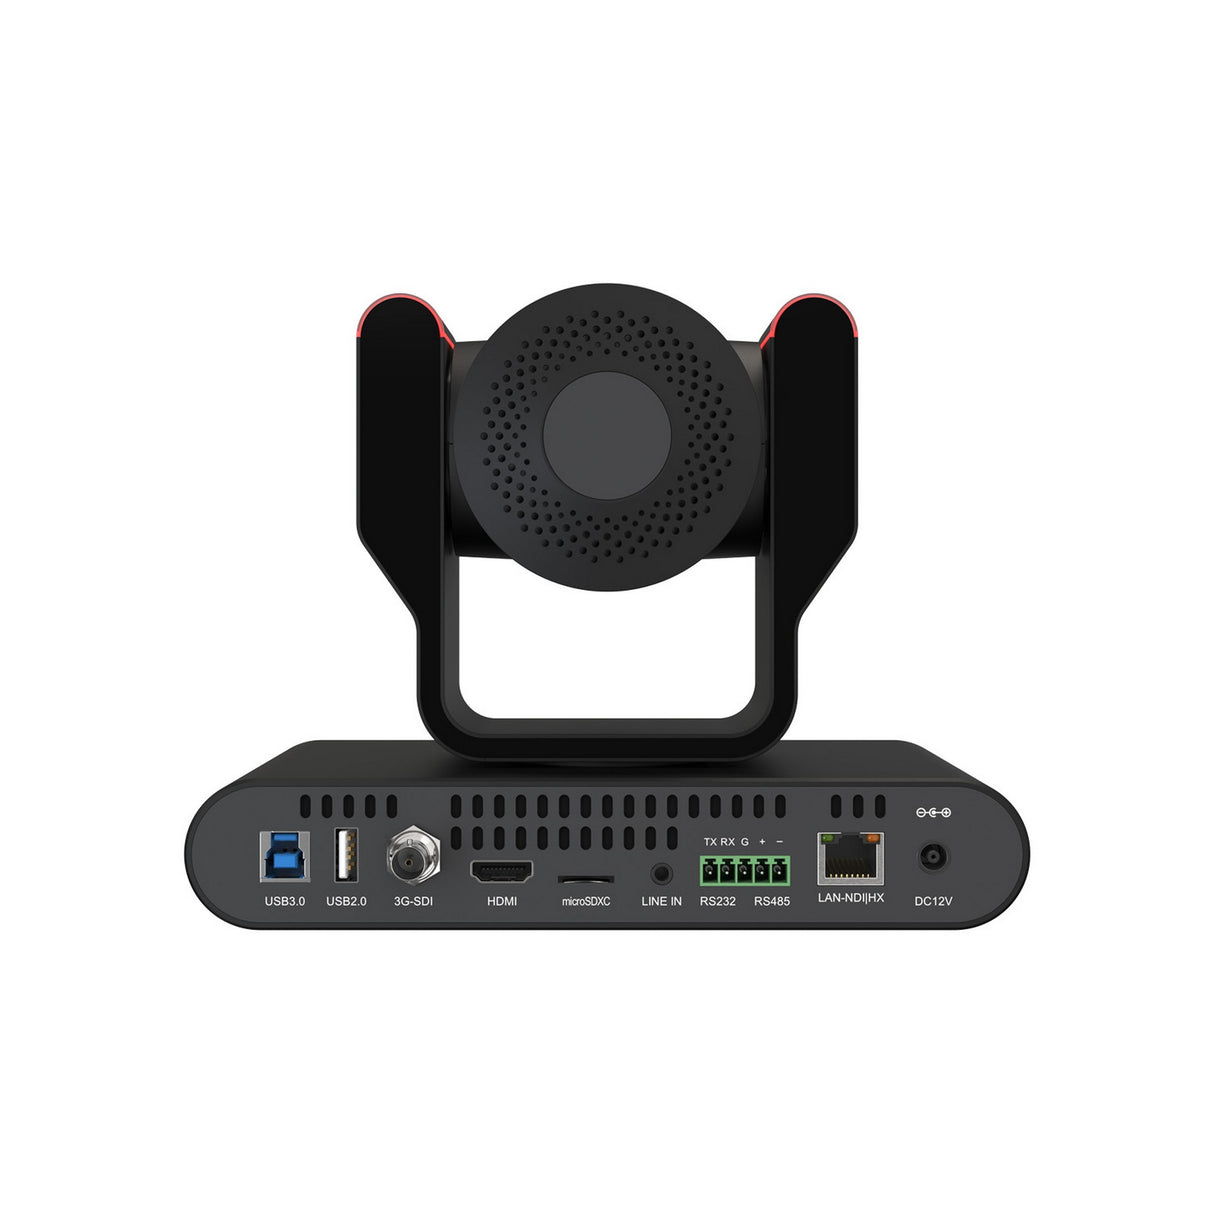 BZBGEAR ADAMO 30X 1080P FHD Auto Tracking HDMI/3G-SDI/USB 2.0/USB 3.0/NDI|HX Live Streaming PTZ Camera